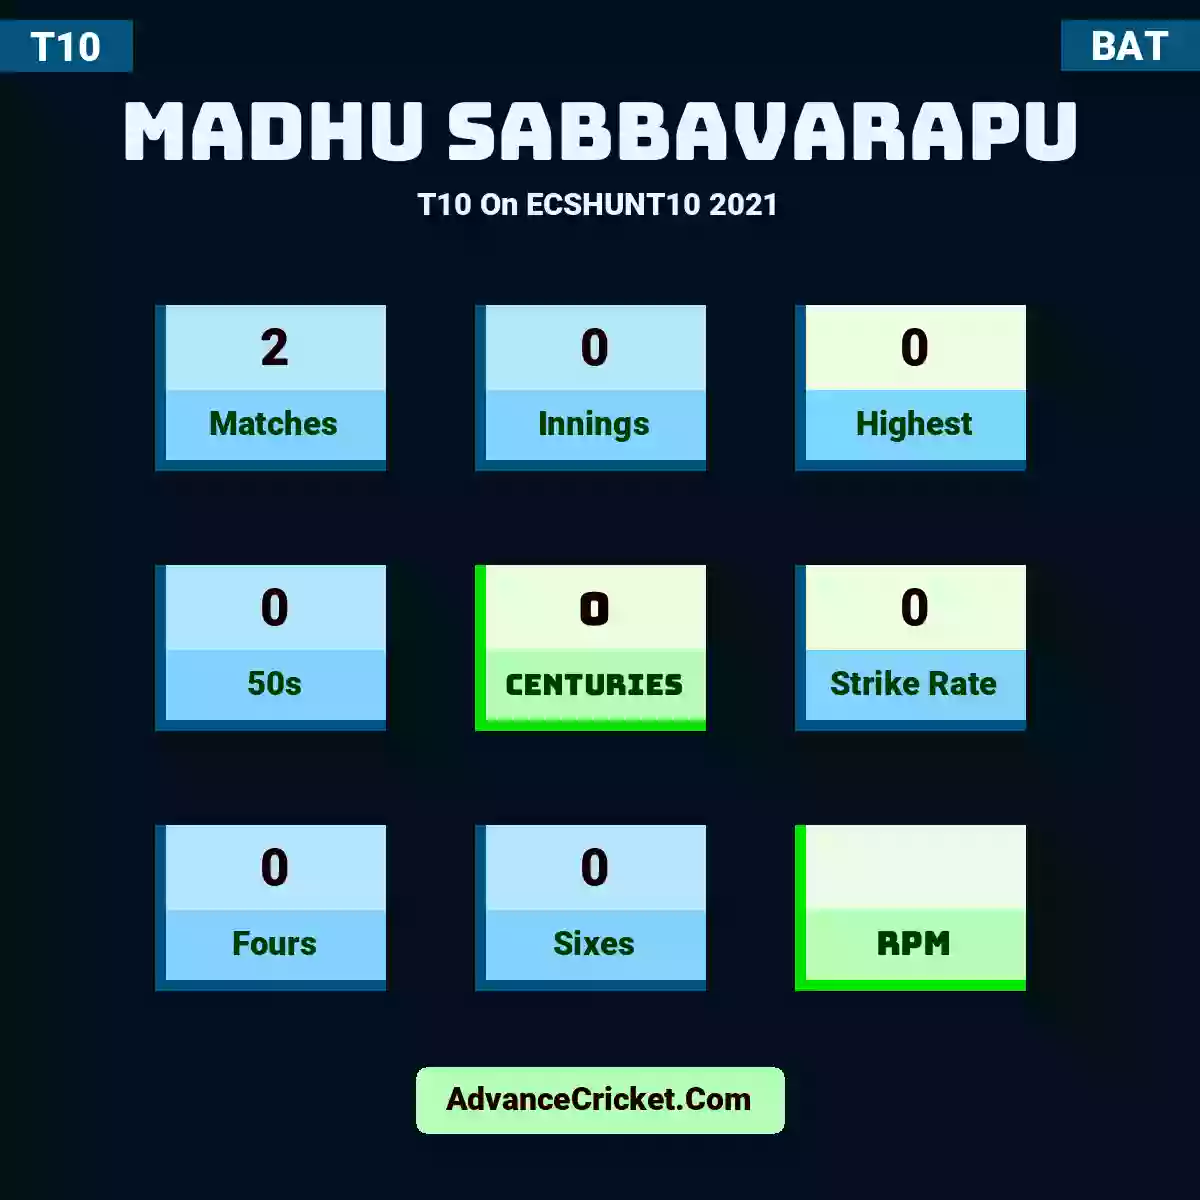 Madhu Sabbavarapu T10  On ECSHUNT10 2021, Madhu Sabbavarapu played 2 matches, scored 0 runs as highest, 0 half-centuries, and 0 centuries, with a strike rate of 0. M.Sabbavarapu hit 0 fours and 0 sixes.